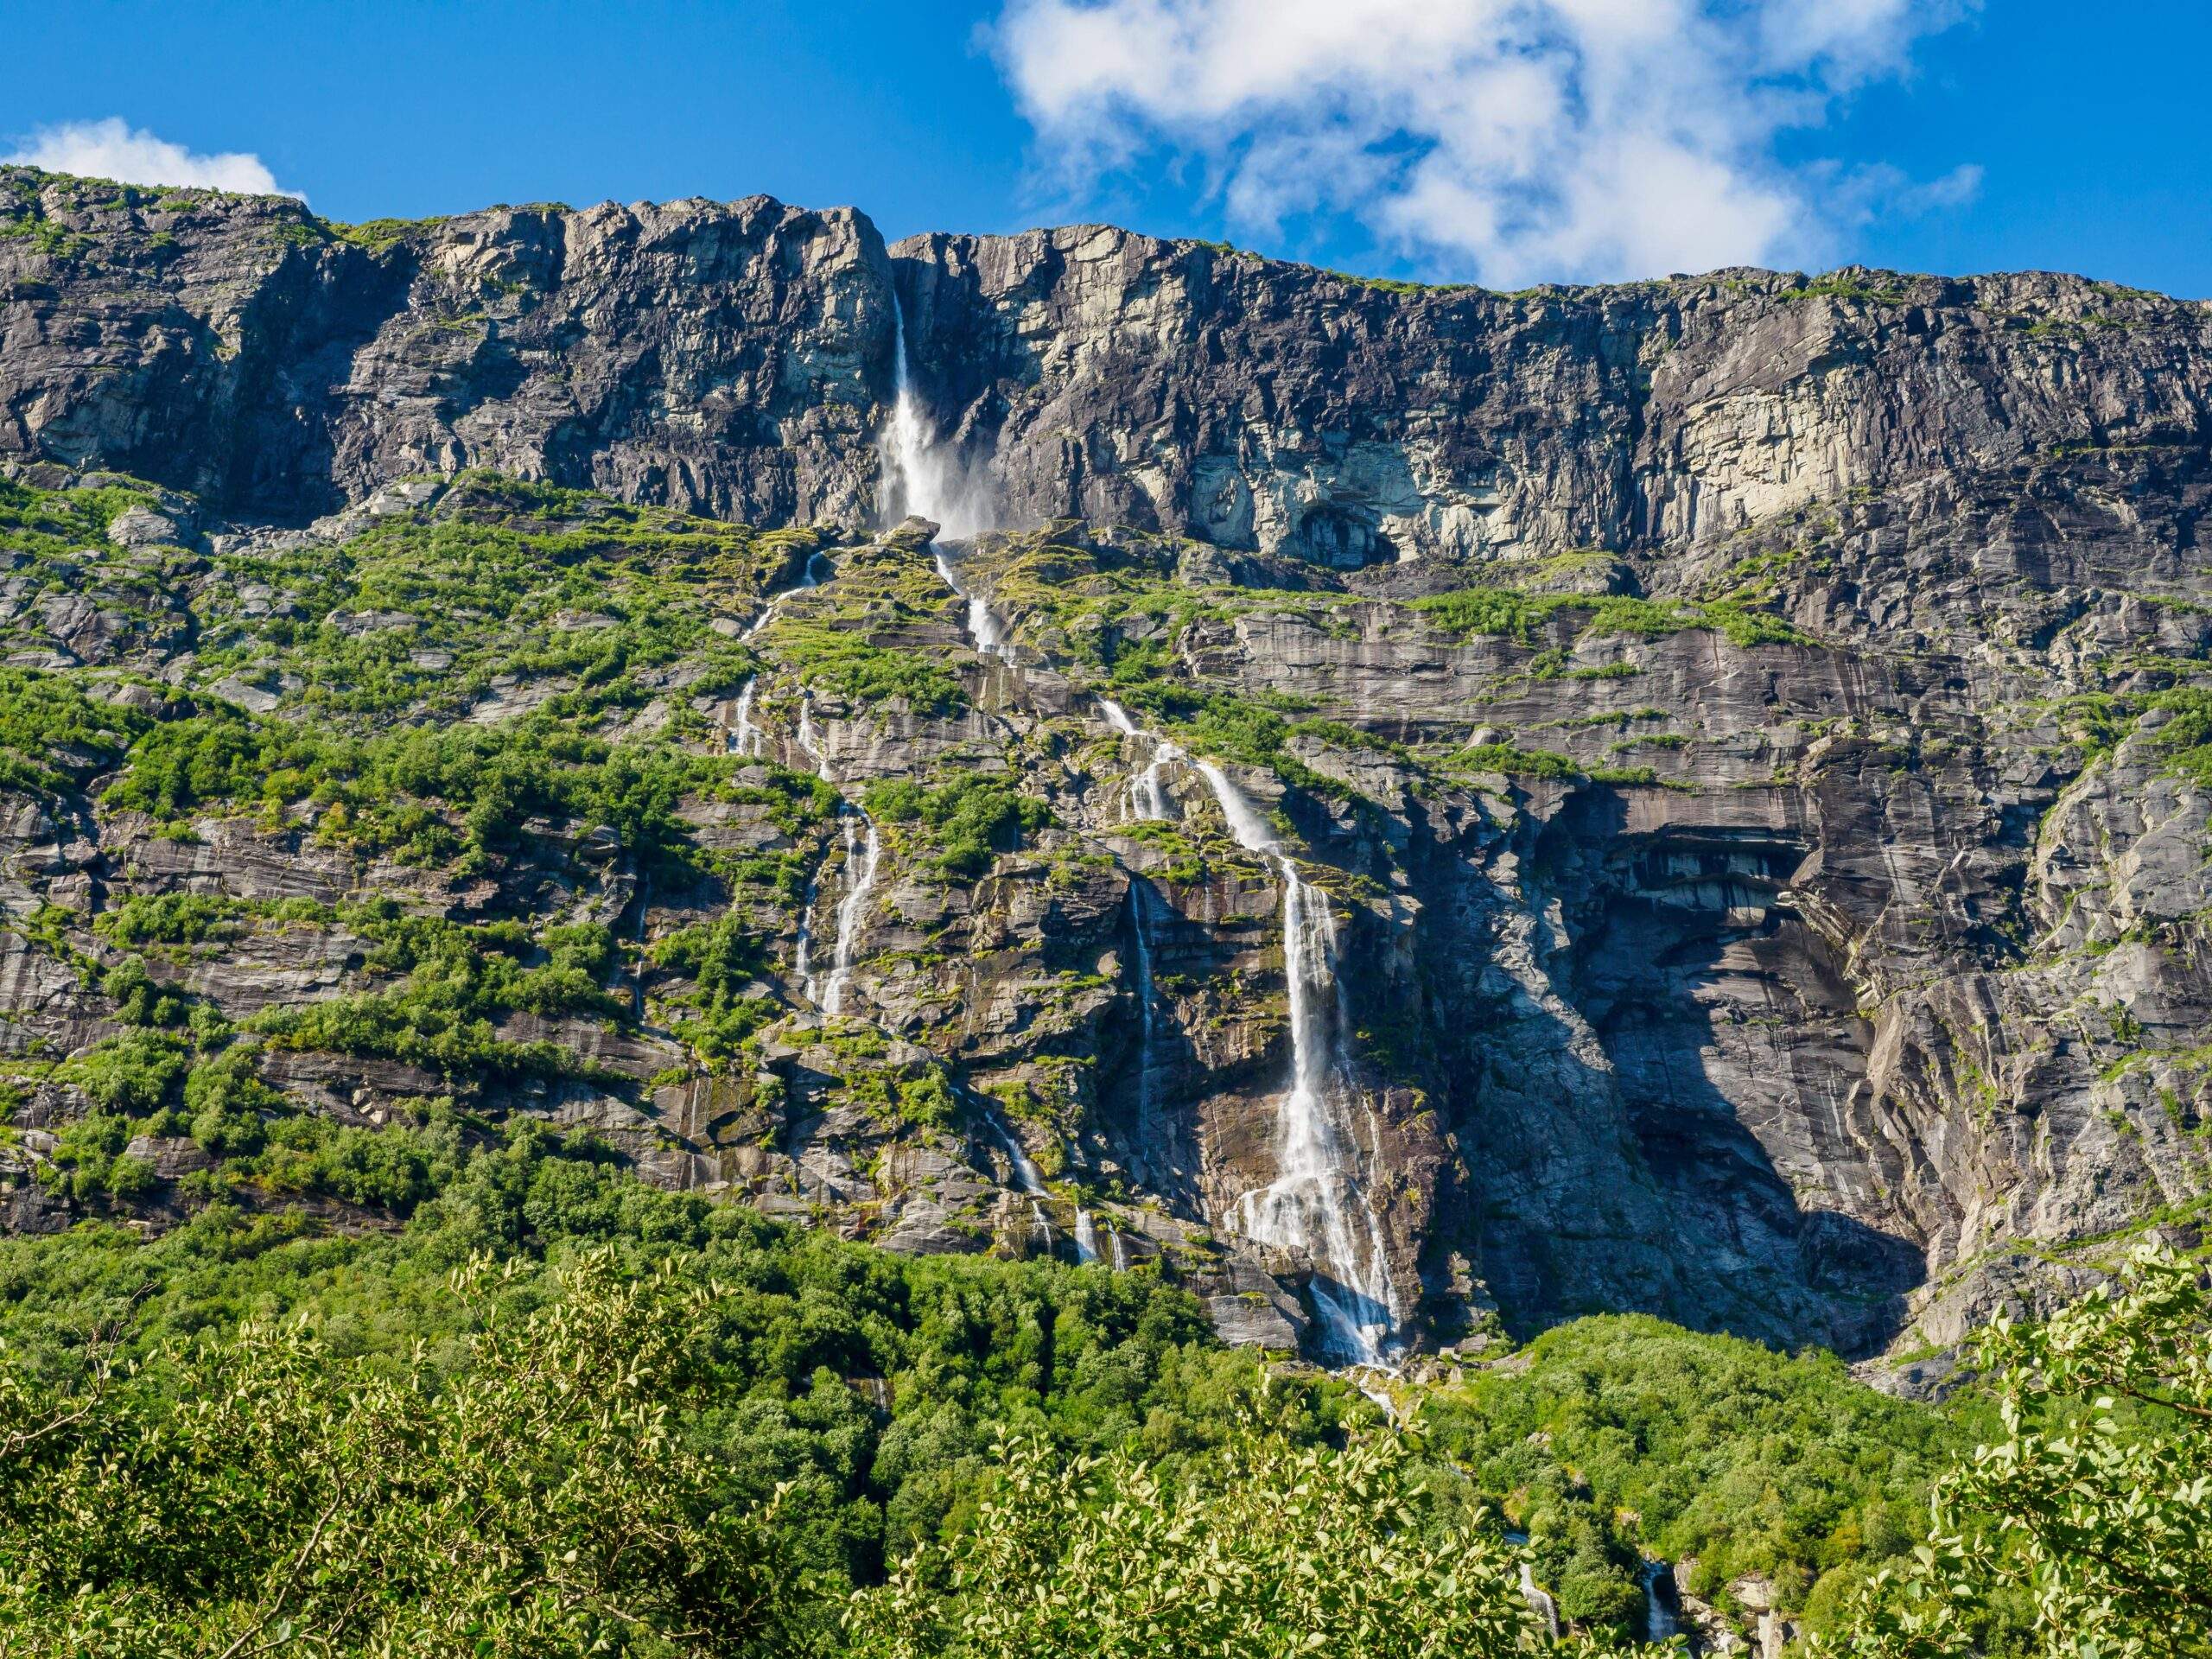 Vinnufossen, a beautiful waterfall flushing down a mountainside in Sunndal, Norway.